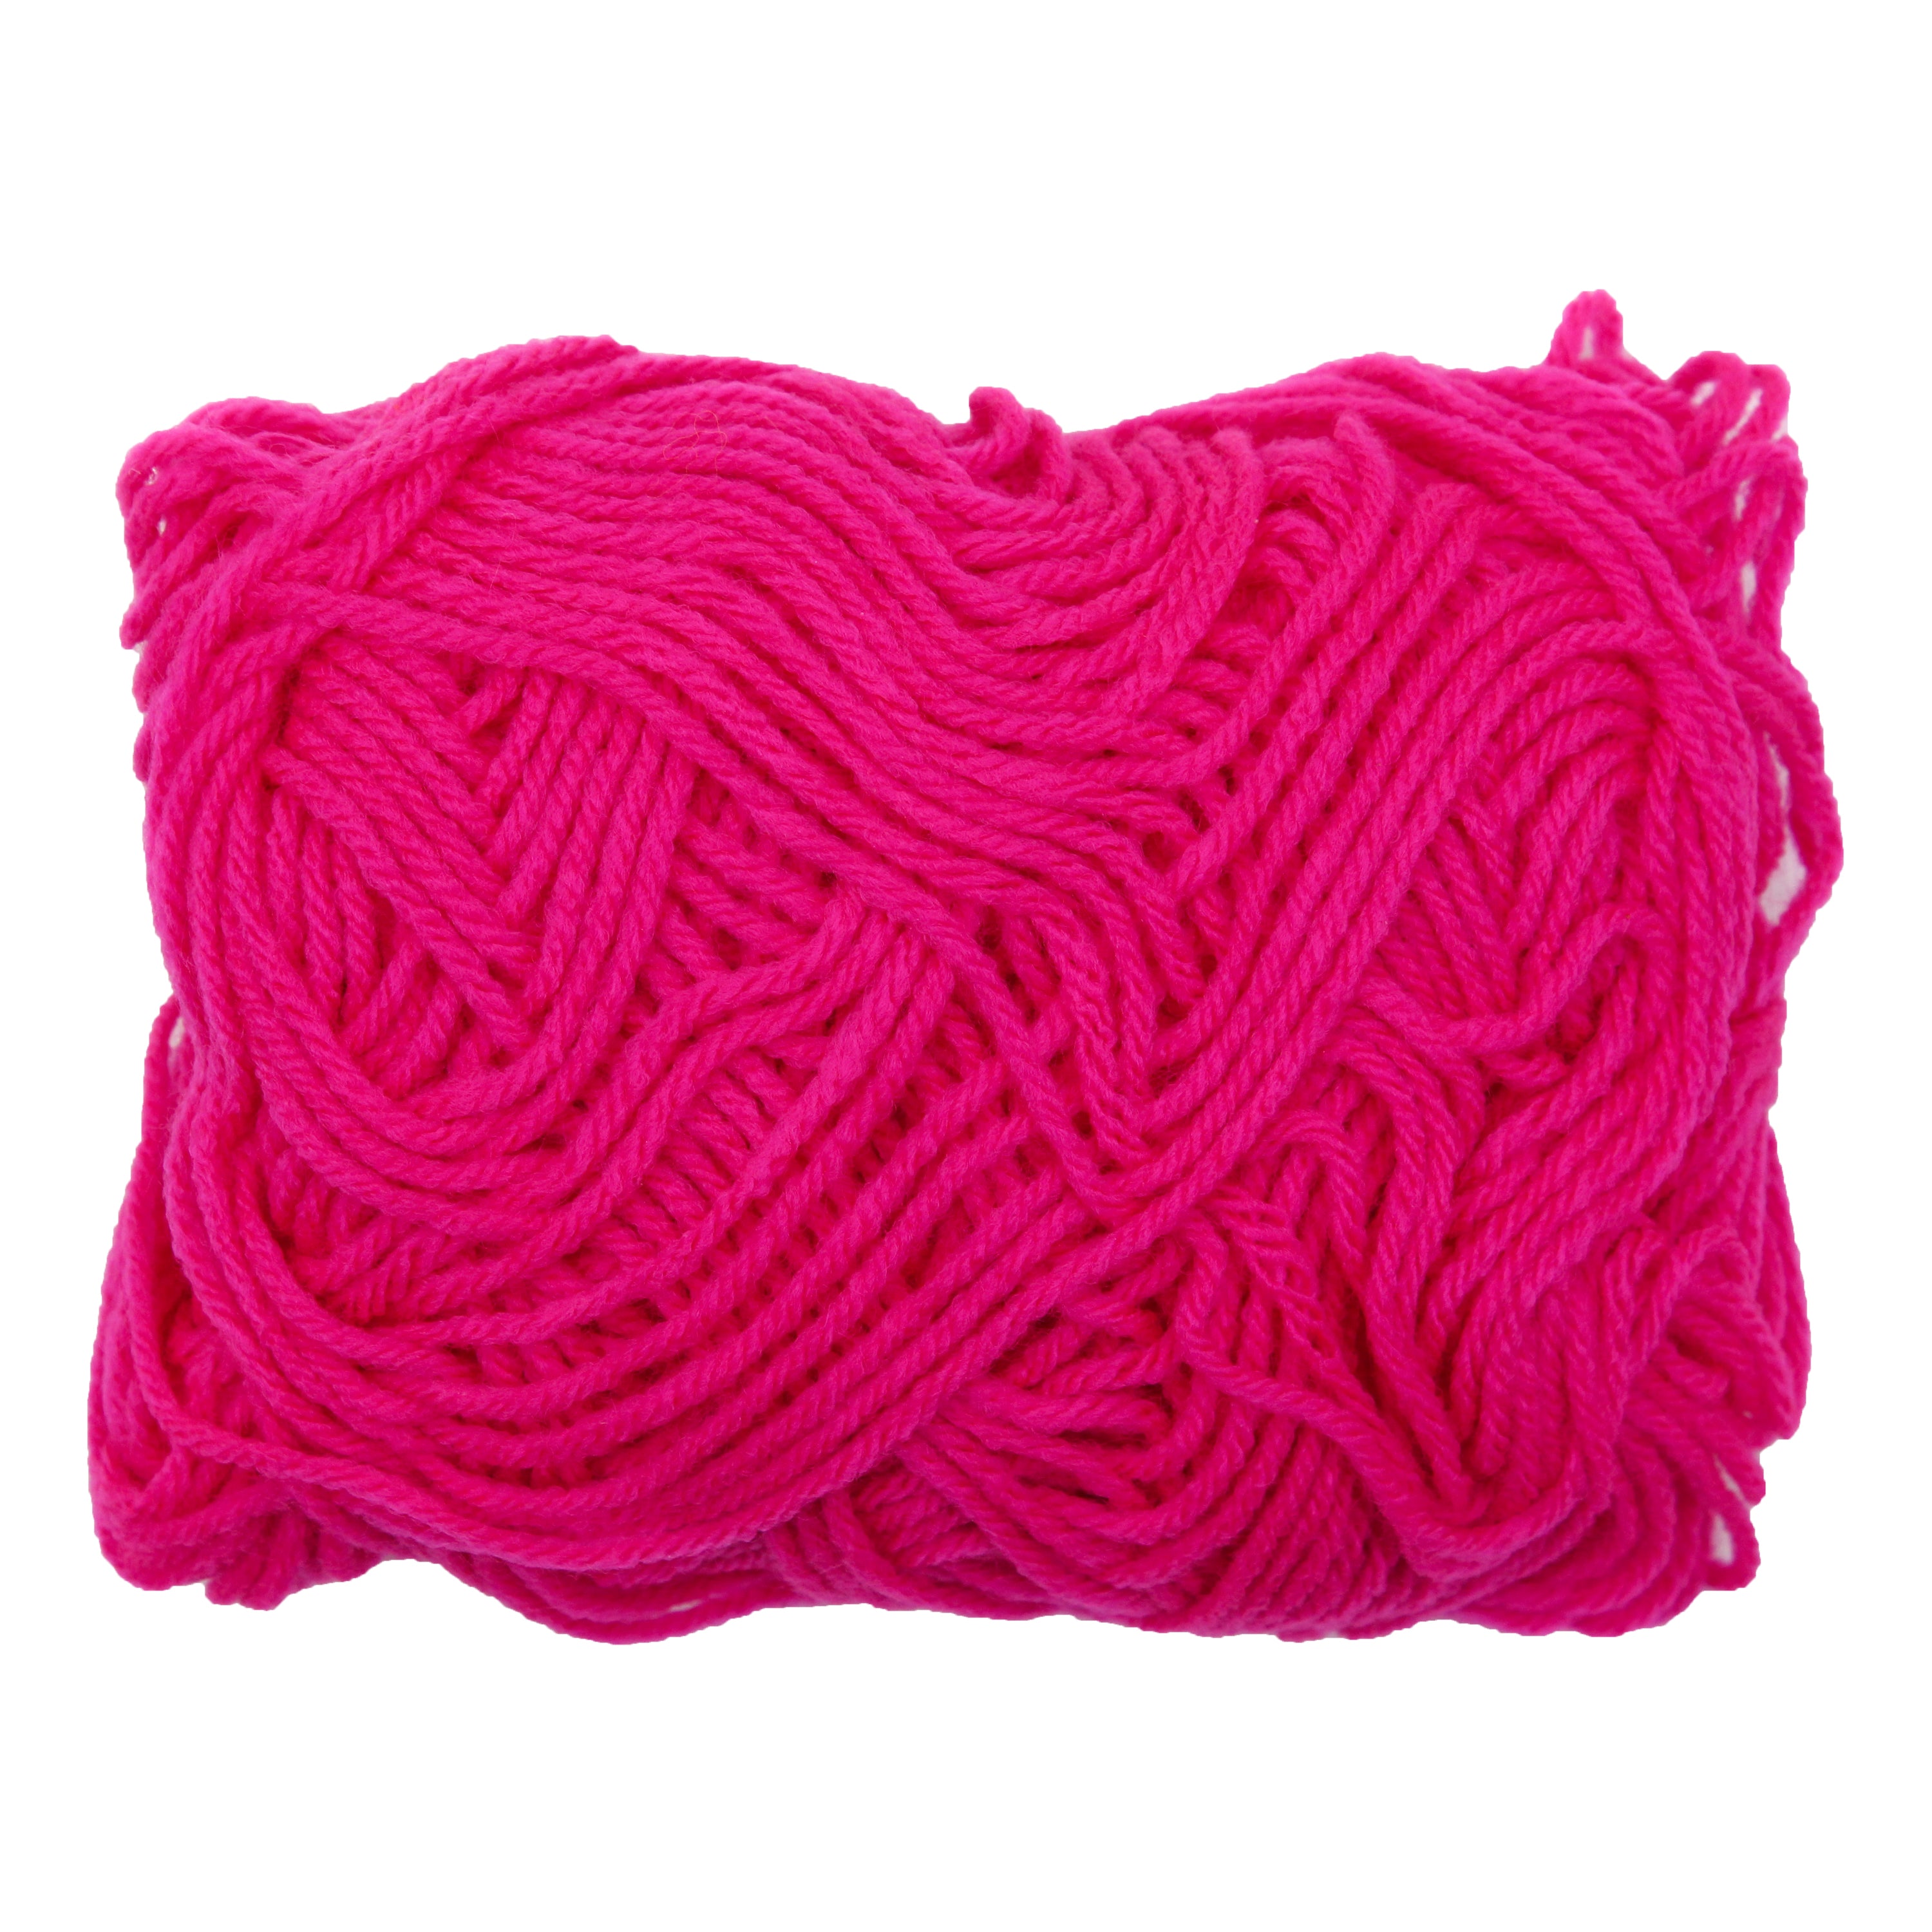 Crochet Hooks For Wool Work 3mm 1pc – Itsy Bitsy